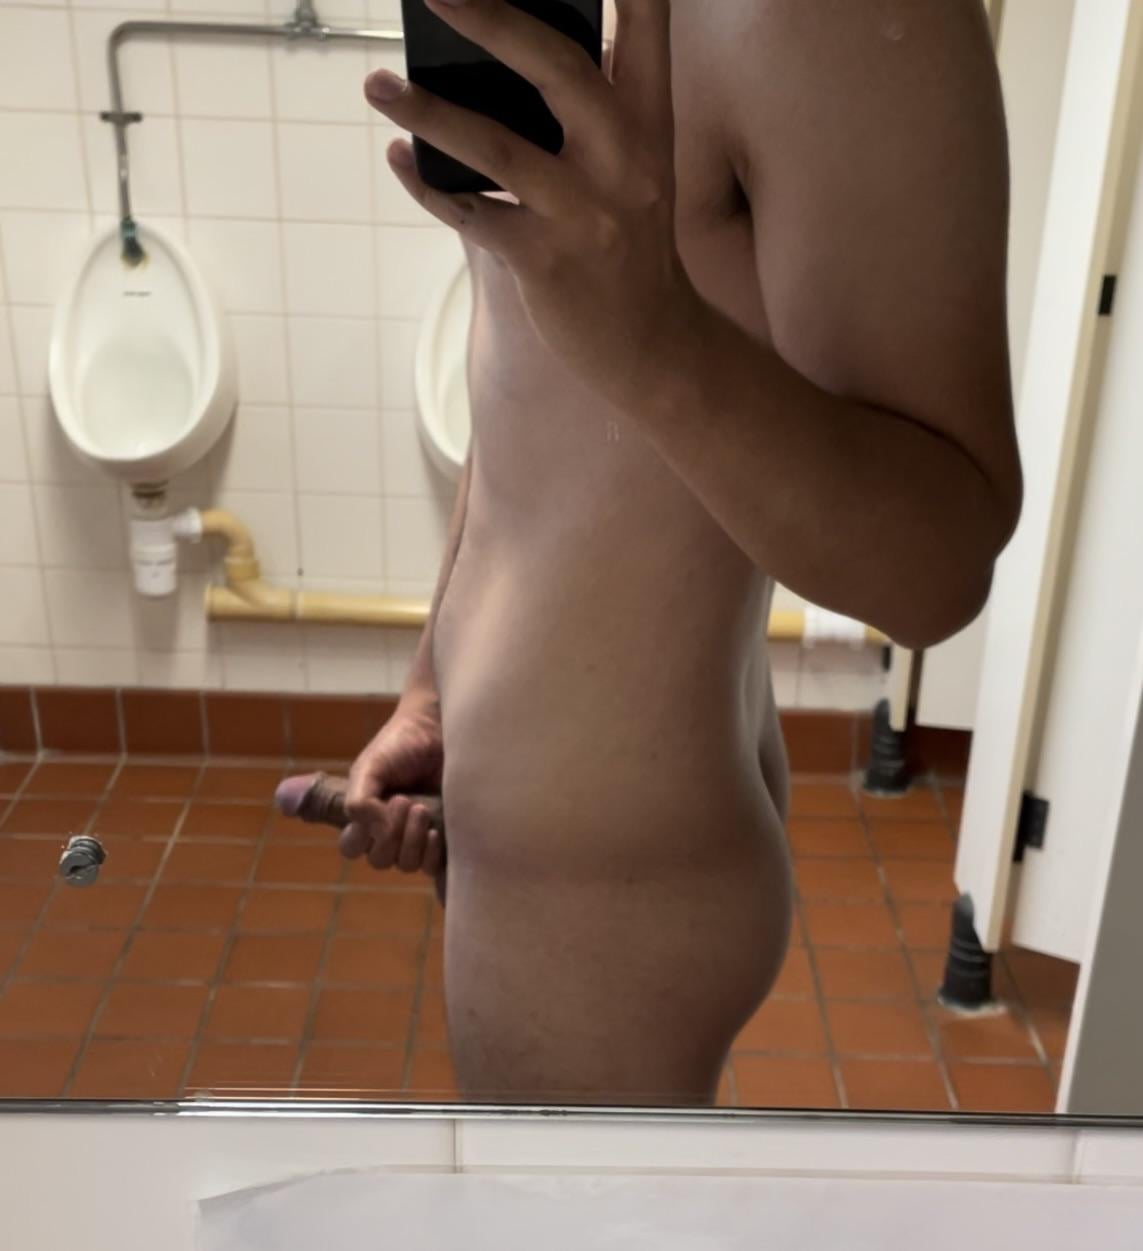 Fully naked at the urinals